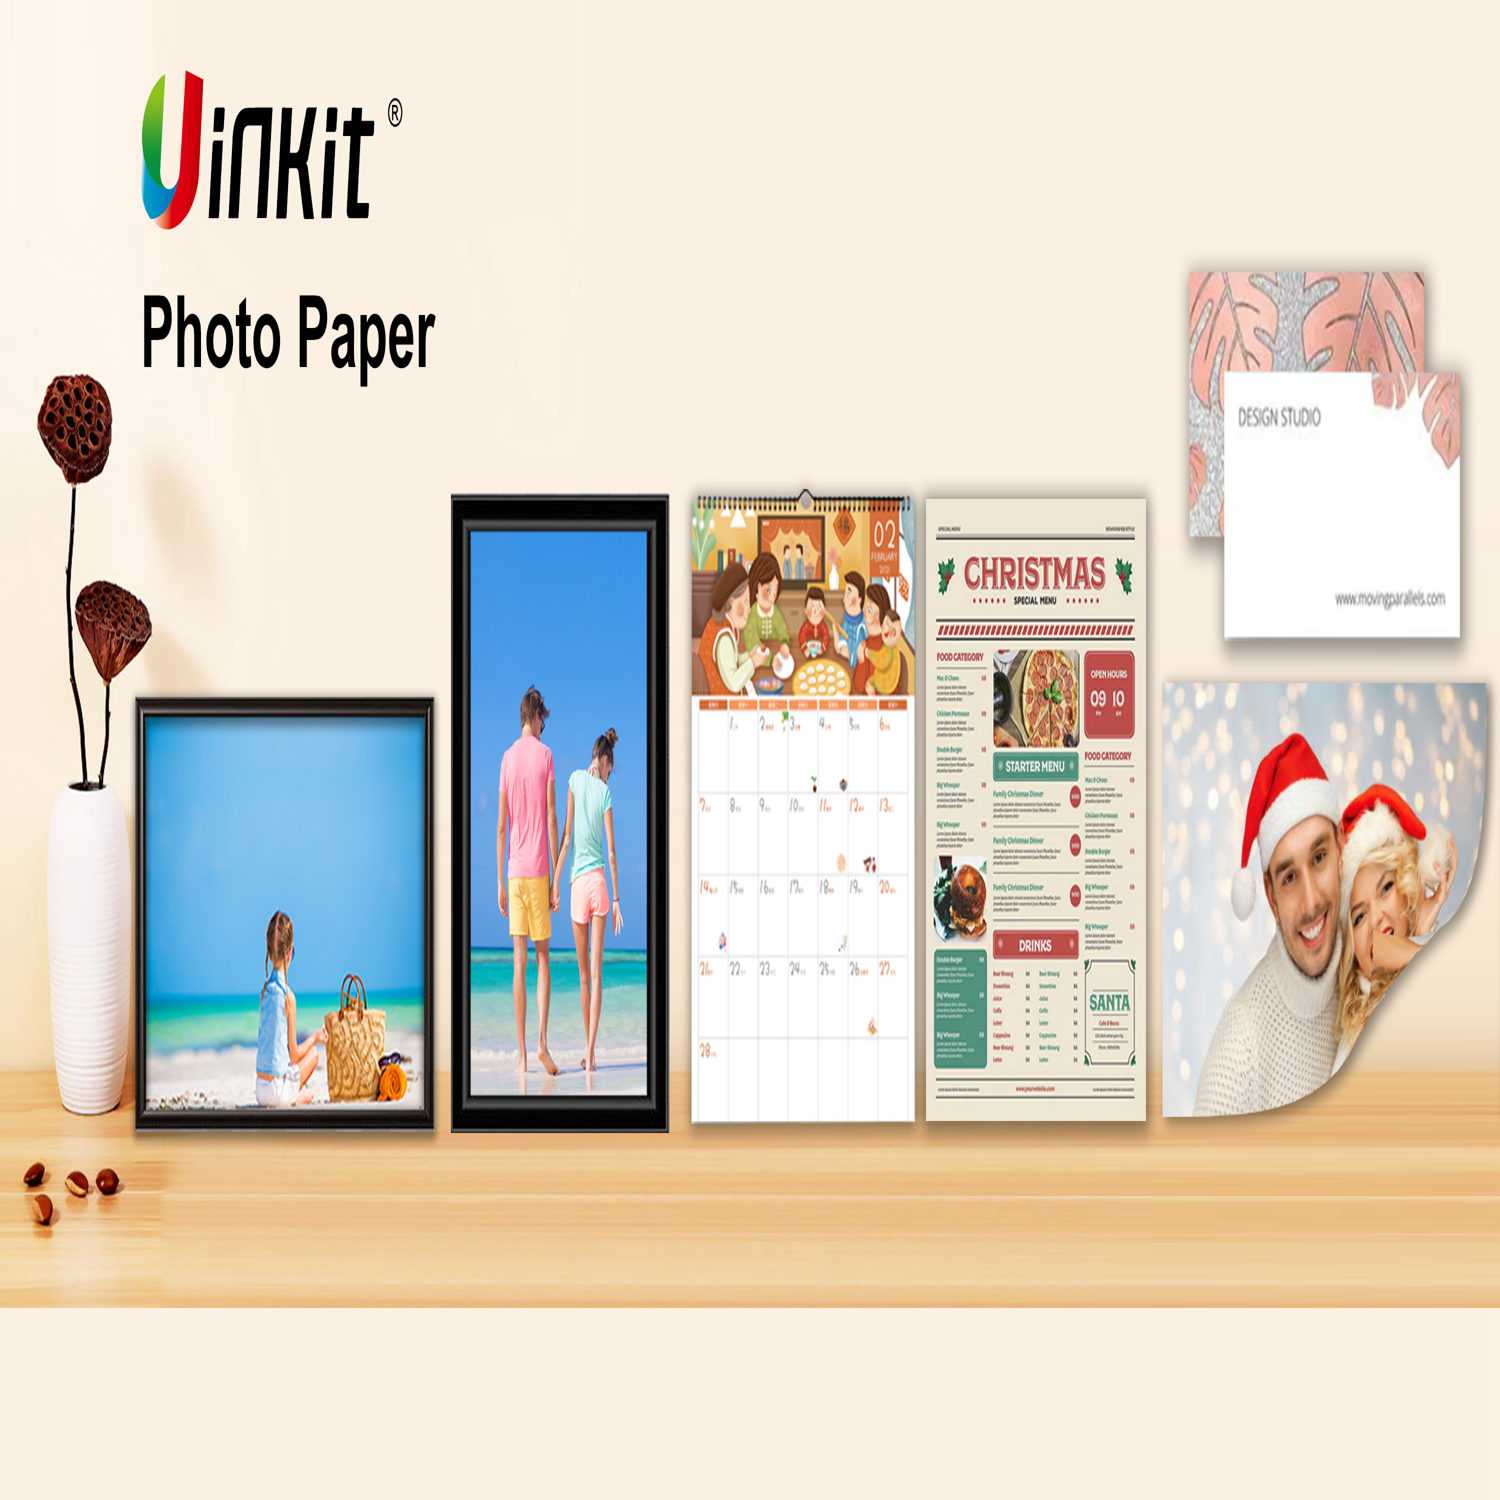 Transparency Film – Uinkit Printing Media On line Shop